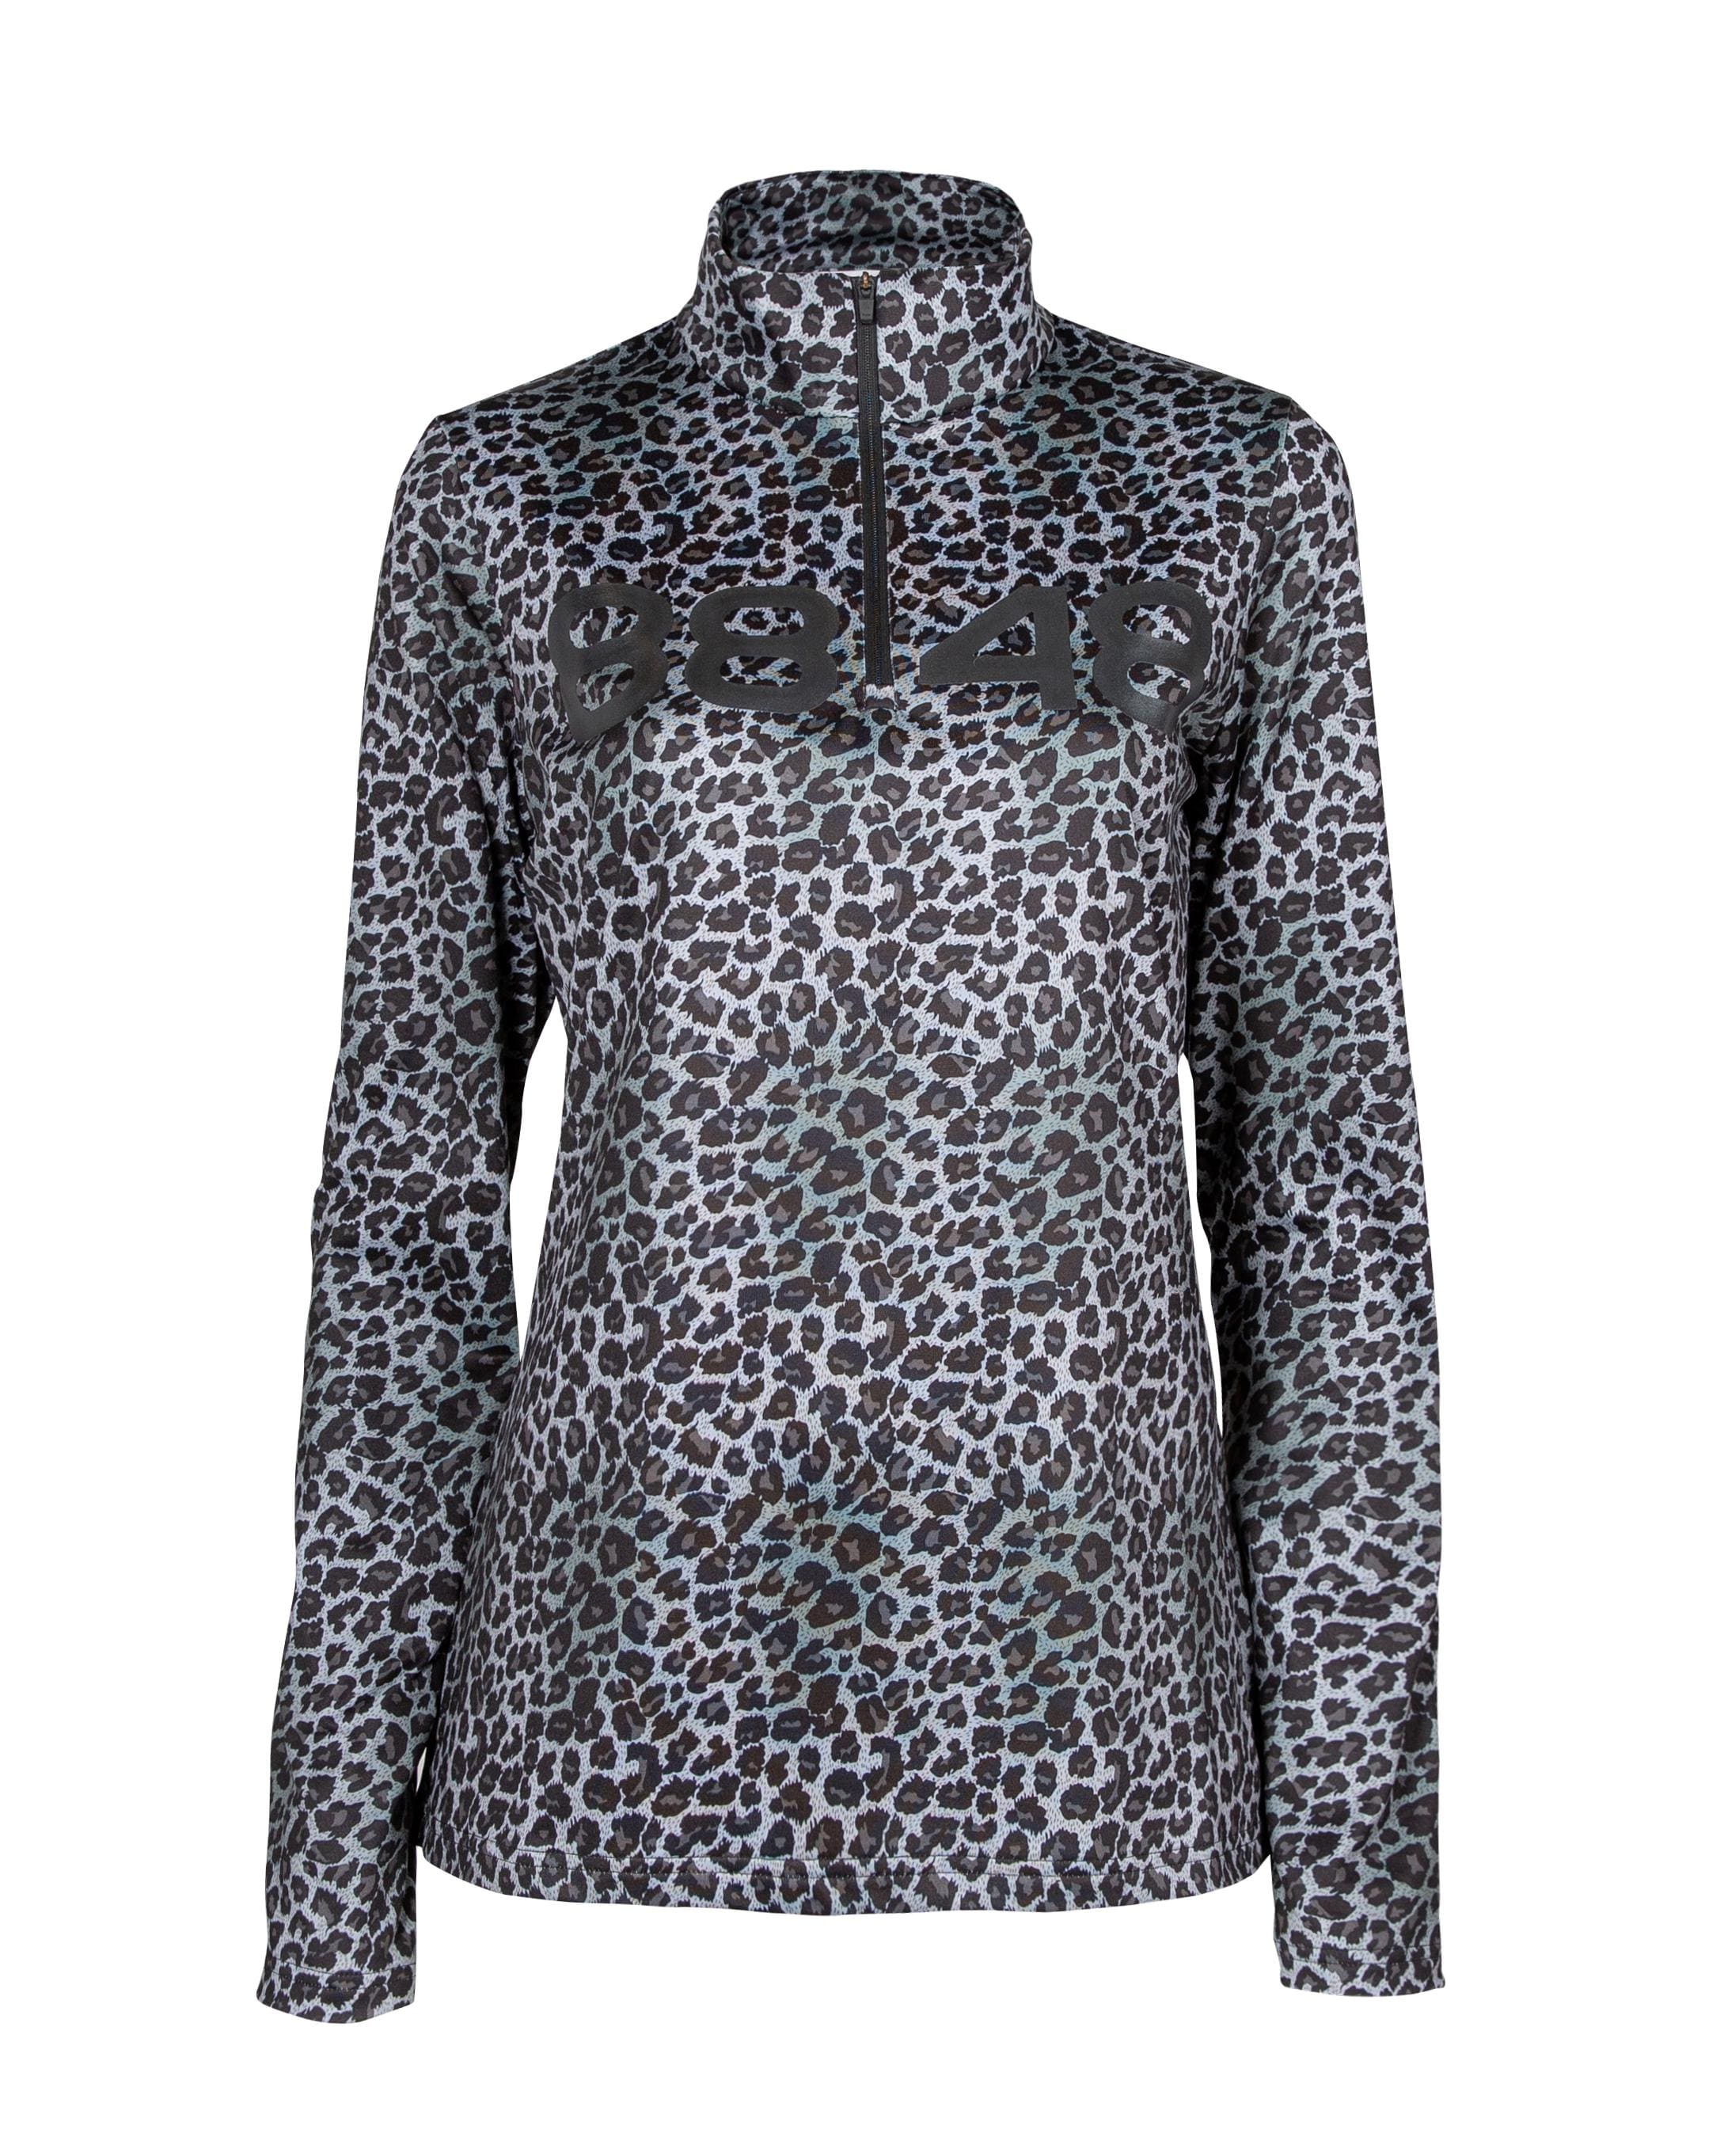 Fairlee W Sweat Leopard - Leopard technischer Sweater Damen